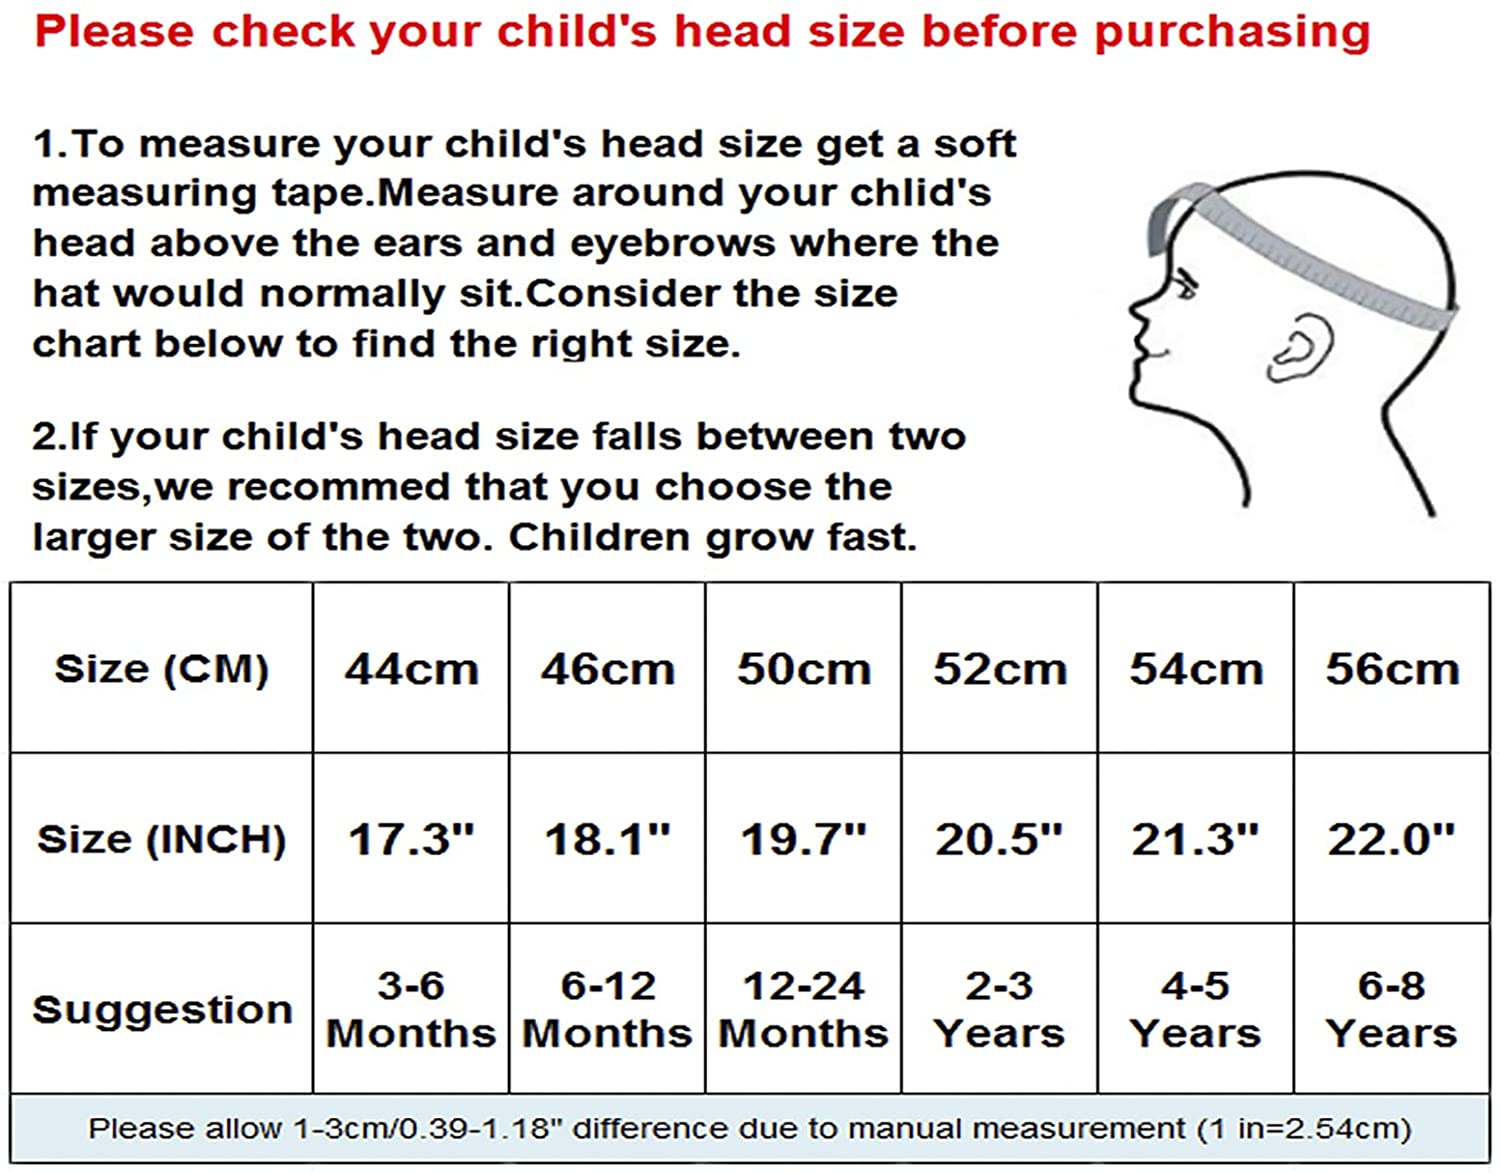 3PCS 56cm Head Measuring Tape Infant Head Circumference Measure